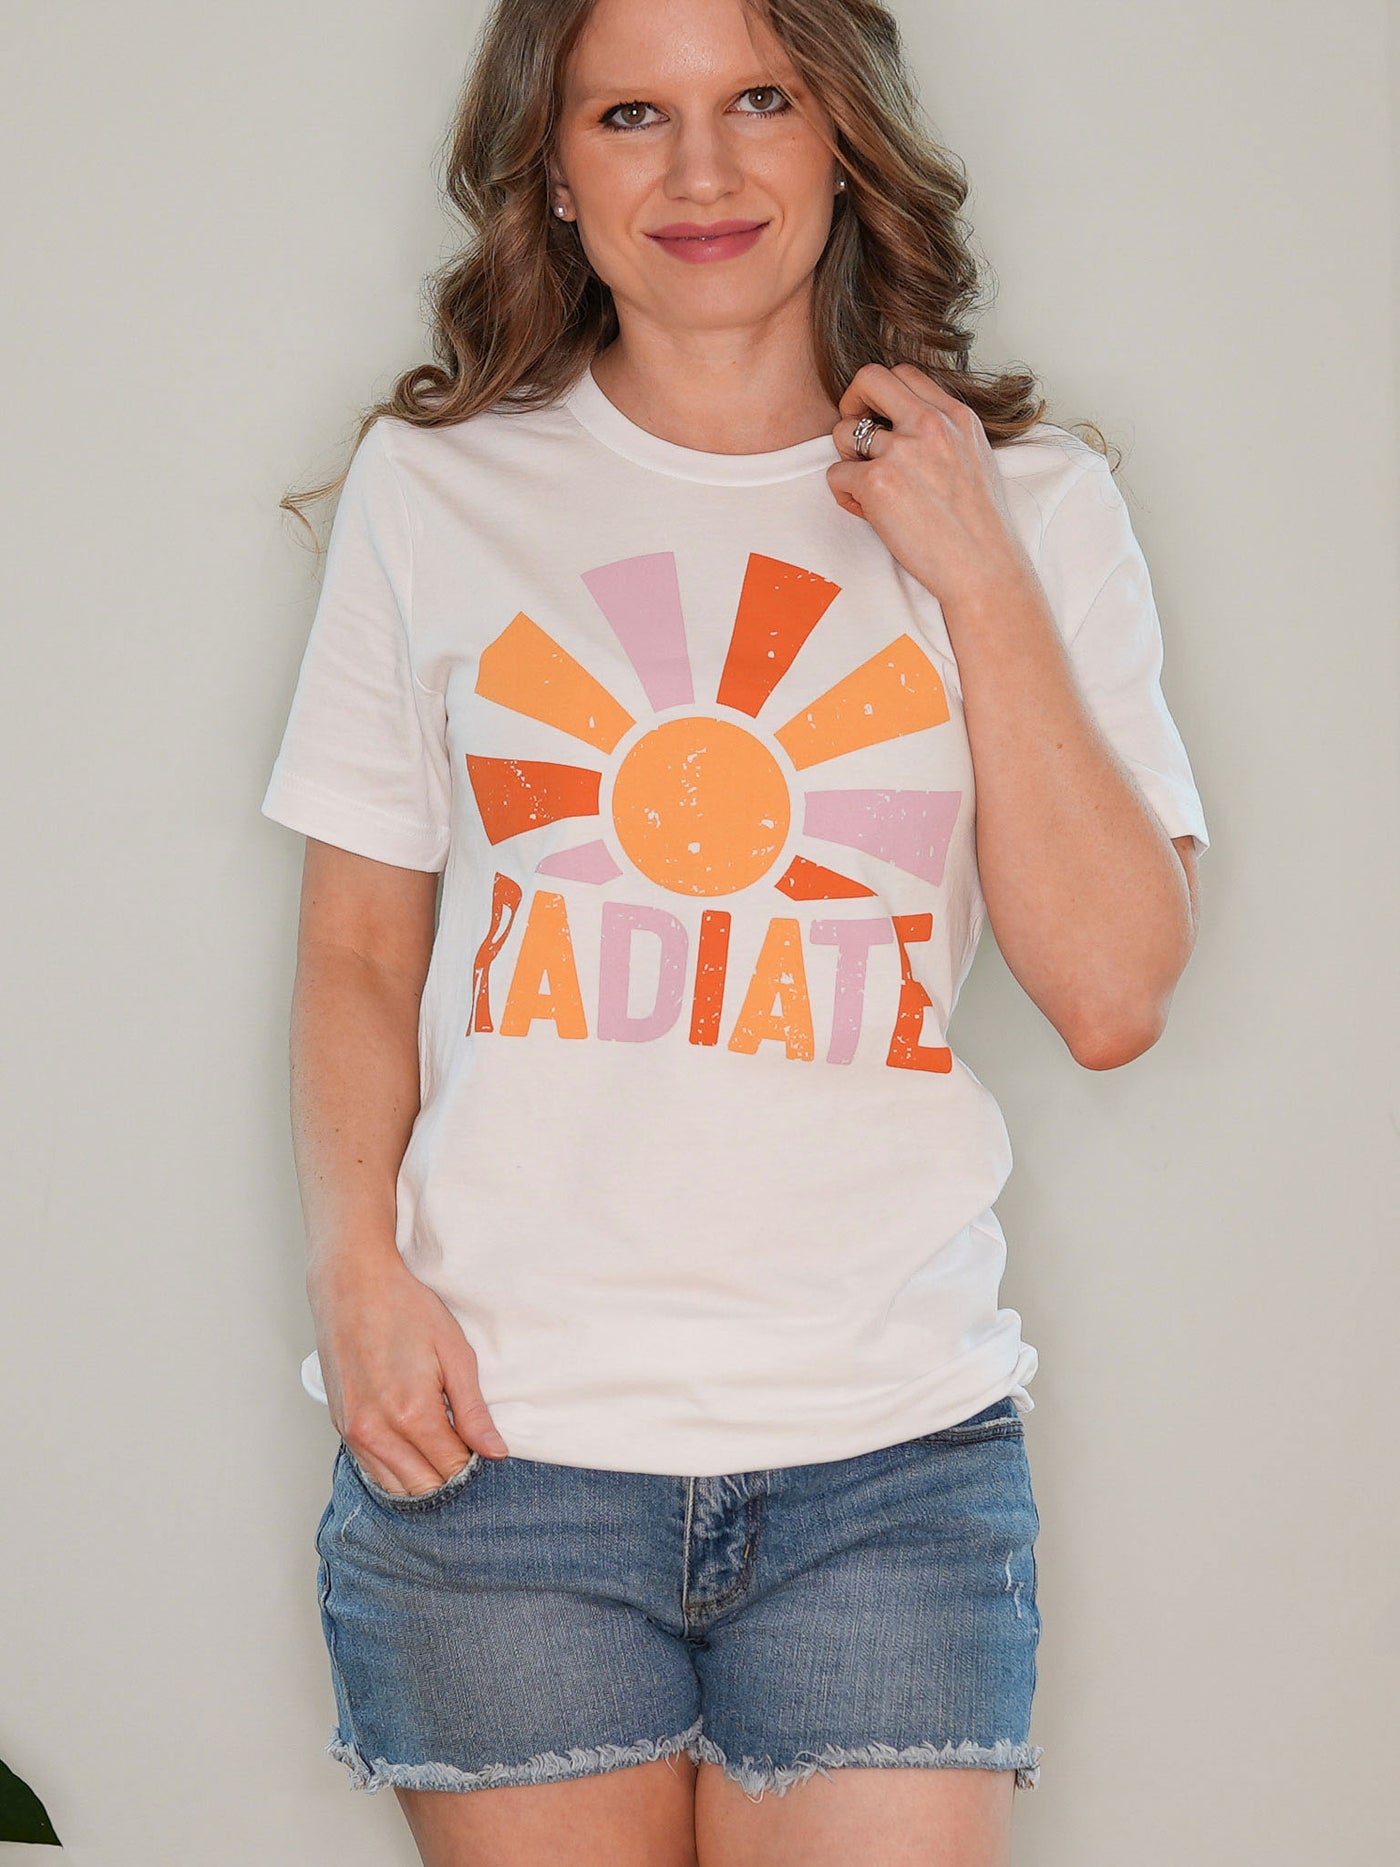 Radiate Christian T-shirt with Sunburst Graphic